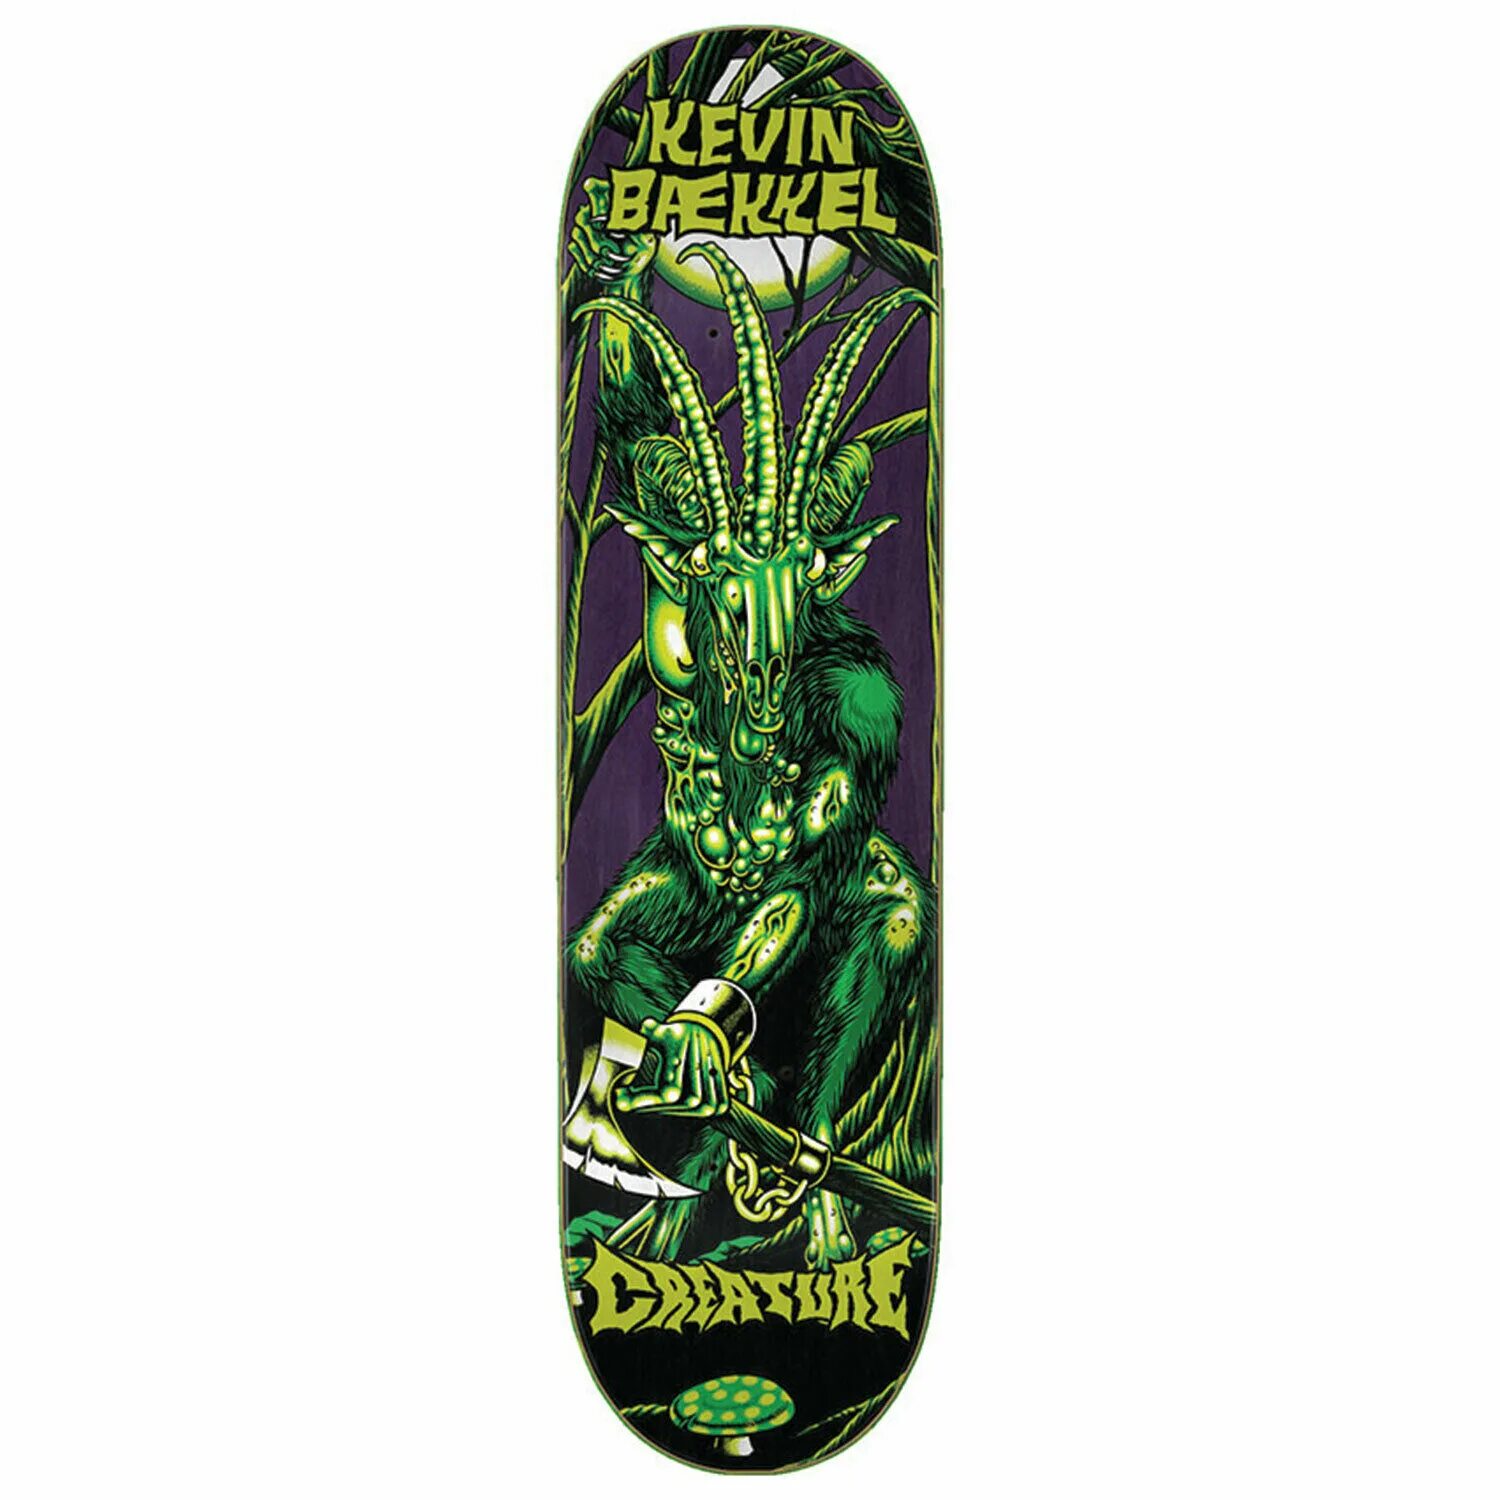 Creature цена. Скейтборд creature. Creature Skate Deck. Creature Deck Vikings Skate. Lockwood skateboarder creature.